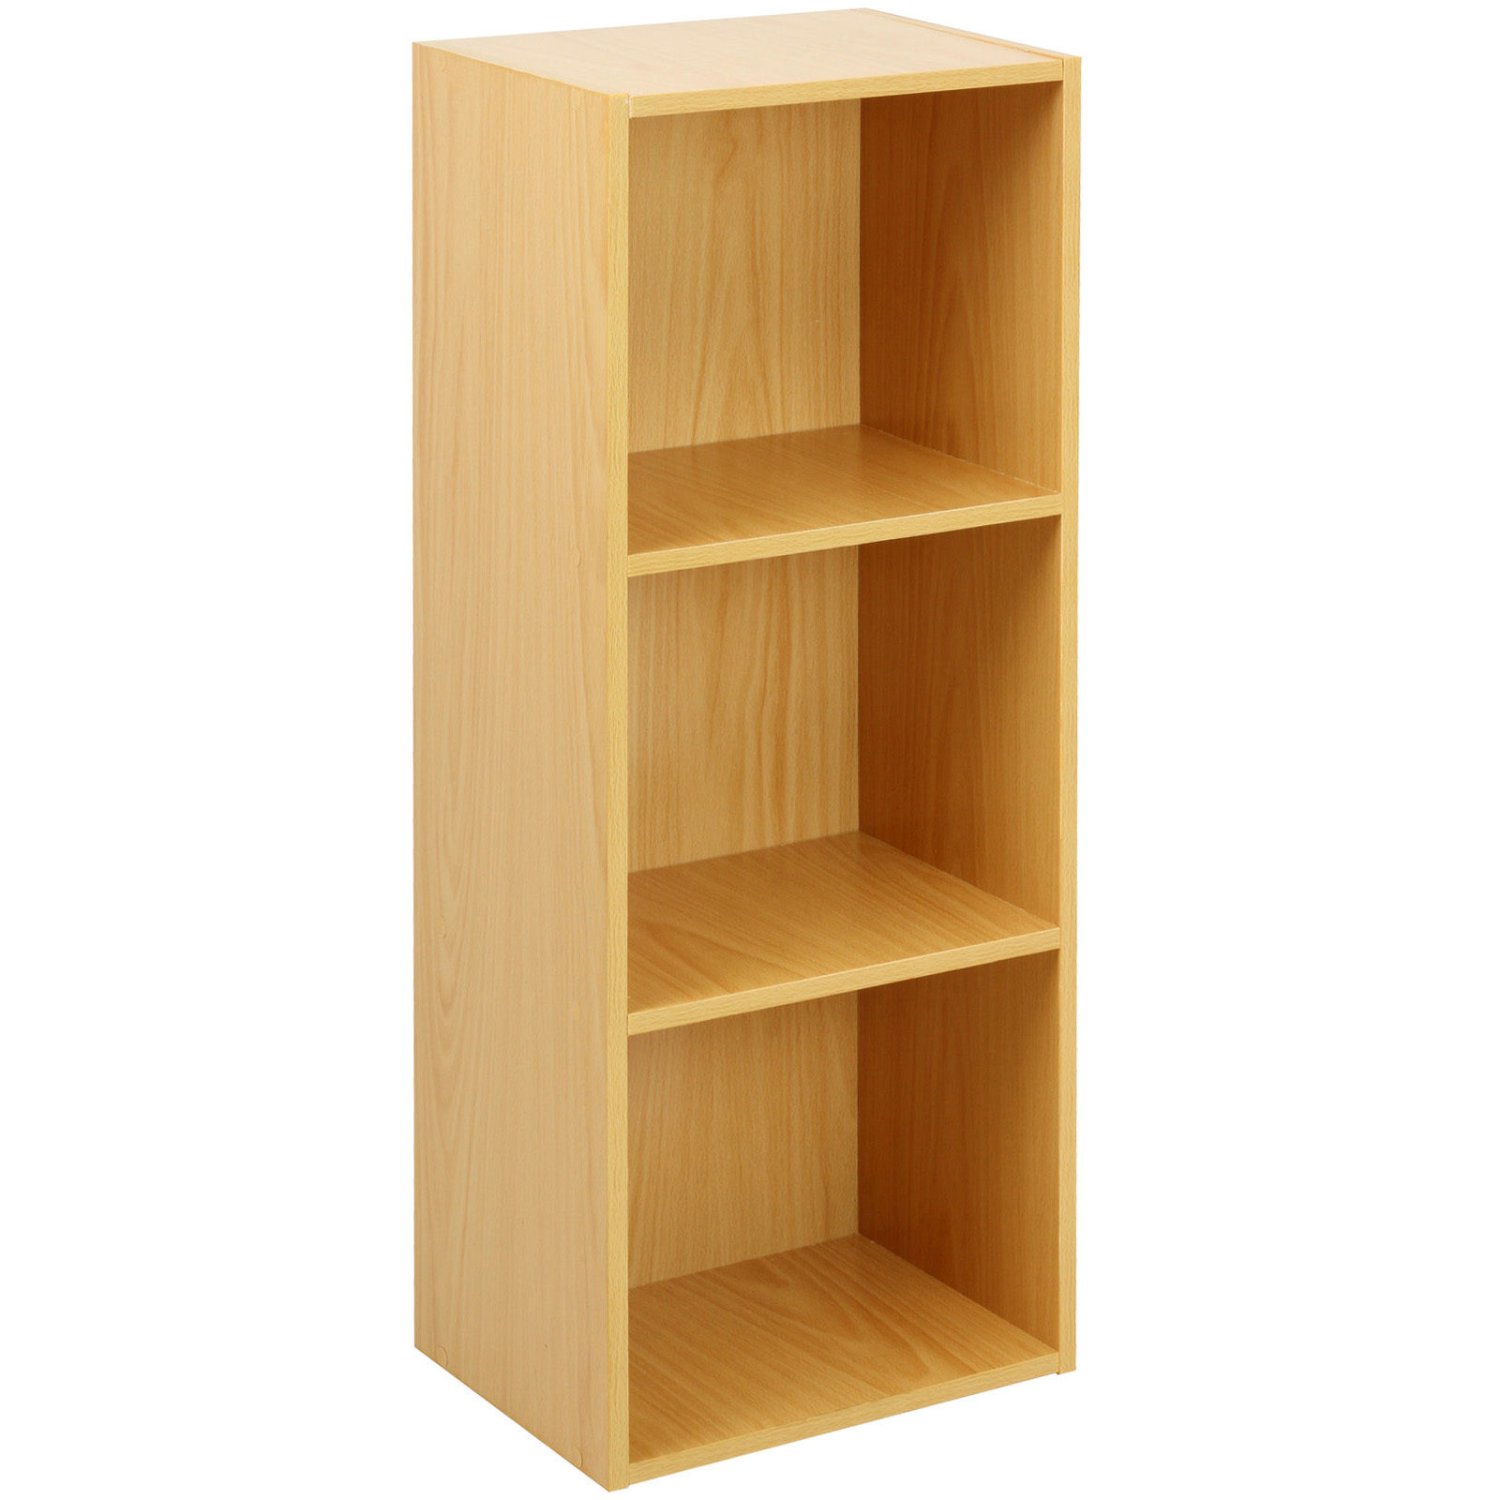 3 Tier Wooden Shelf Beech Bookcase Shelving Storage Display Rack